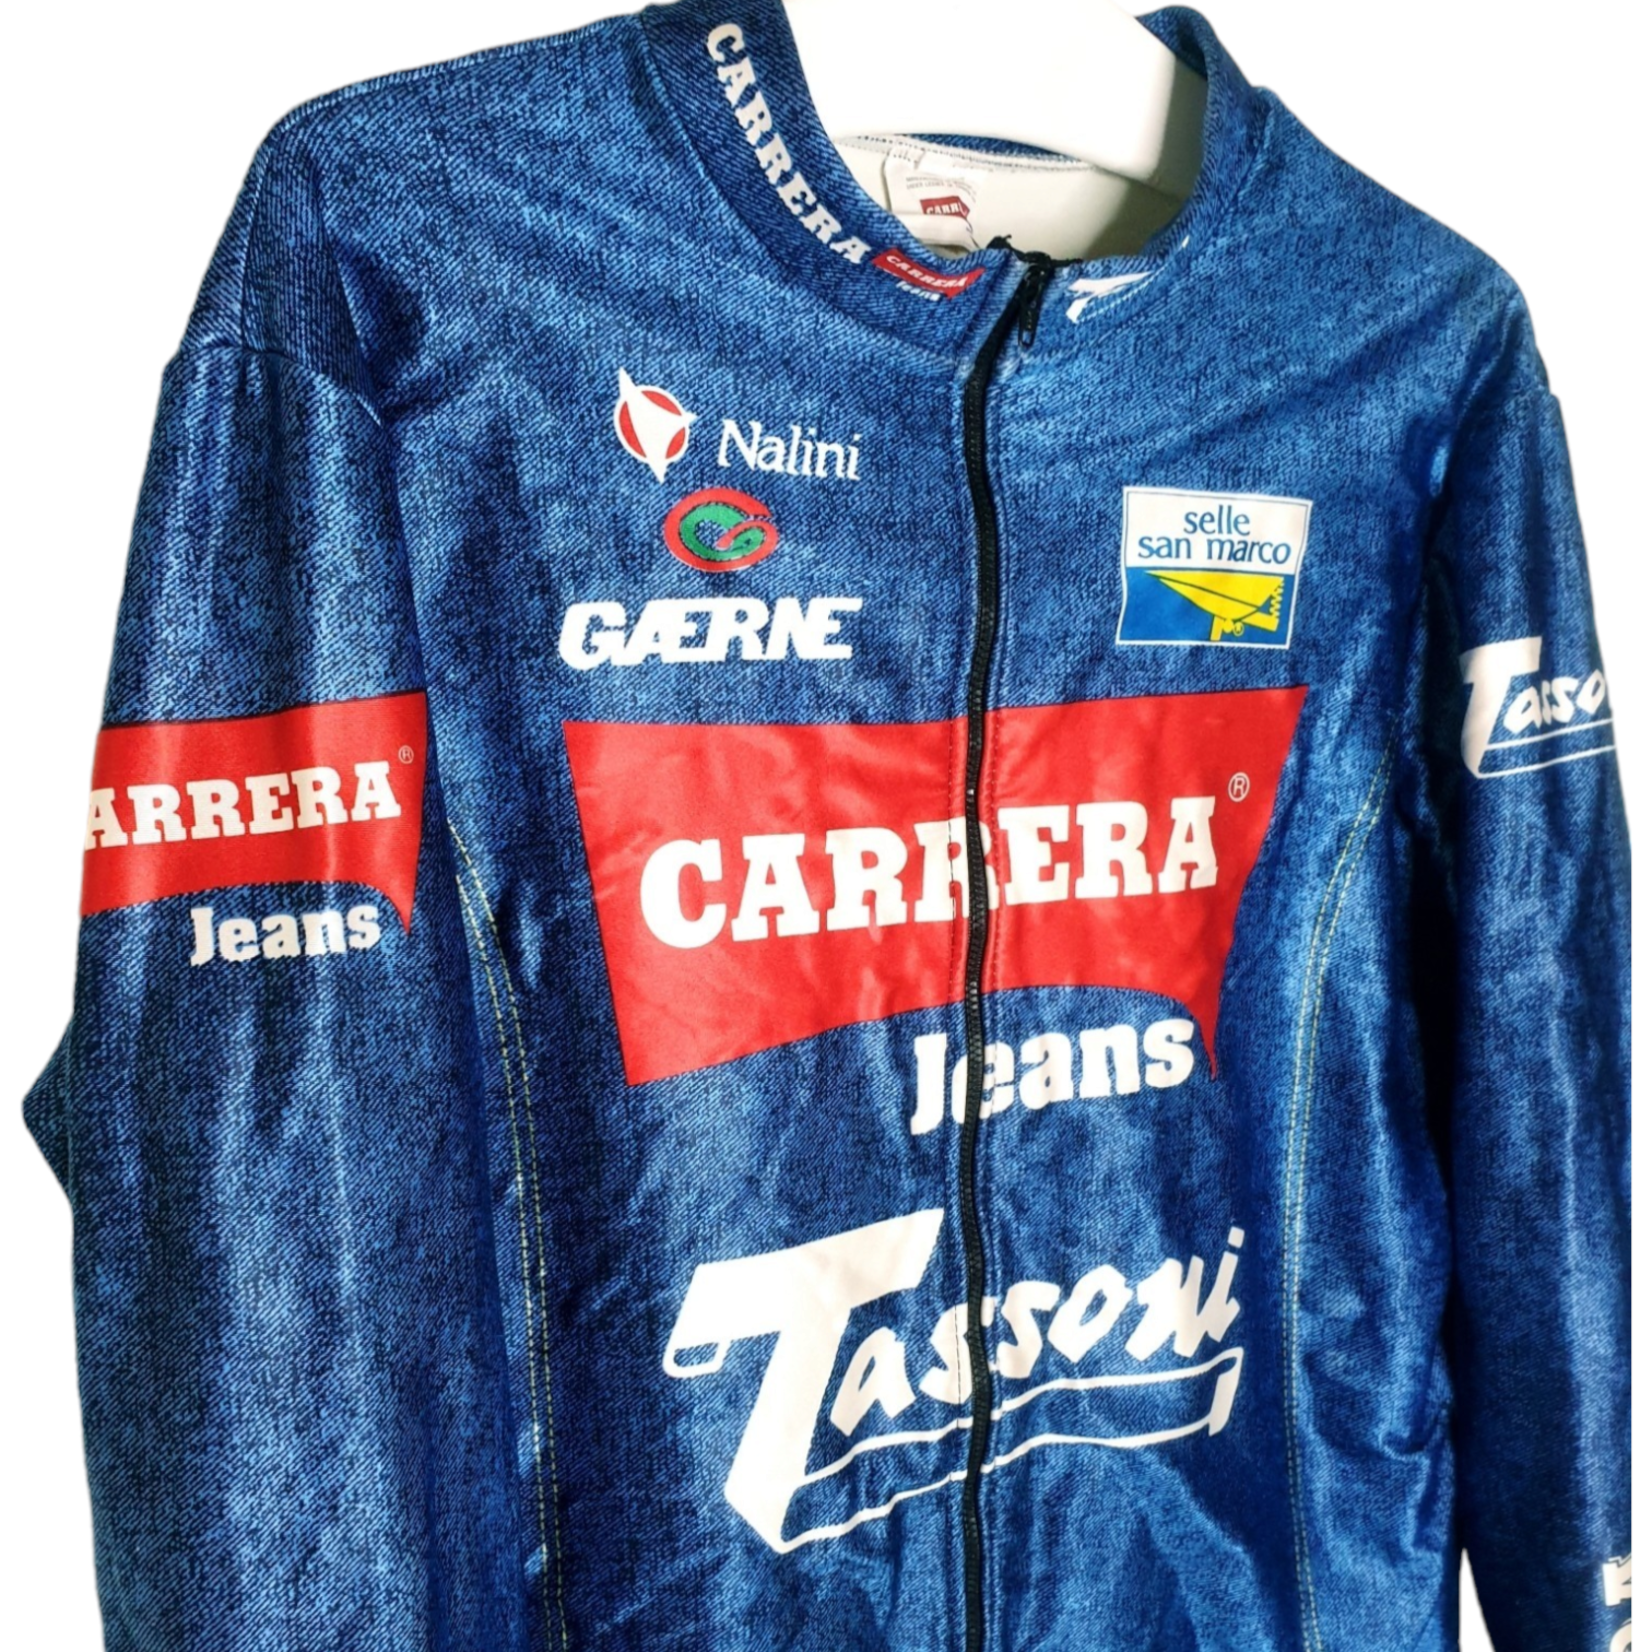 Nalini Original Nalini vintage cycling jacket Carrera Jeans - Tassoni 1993